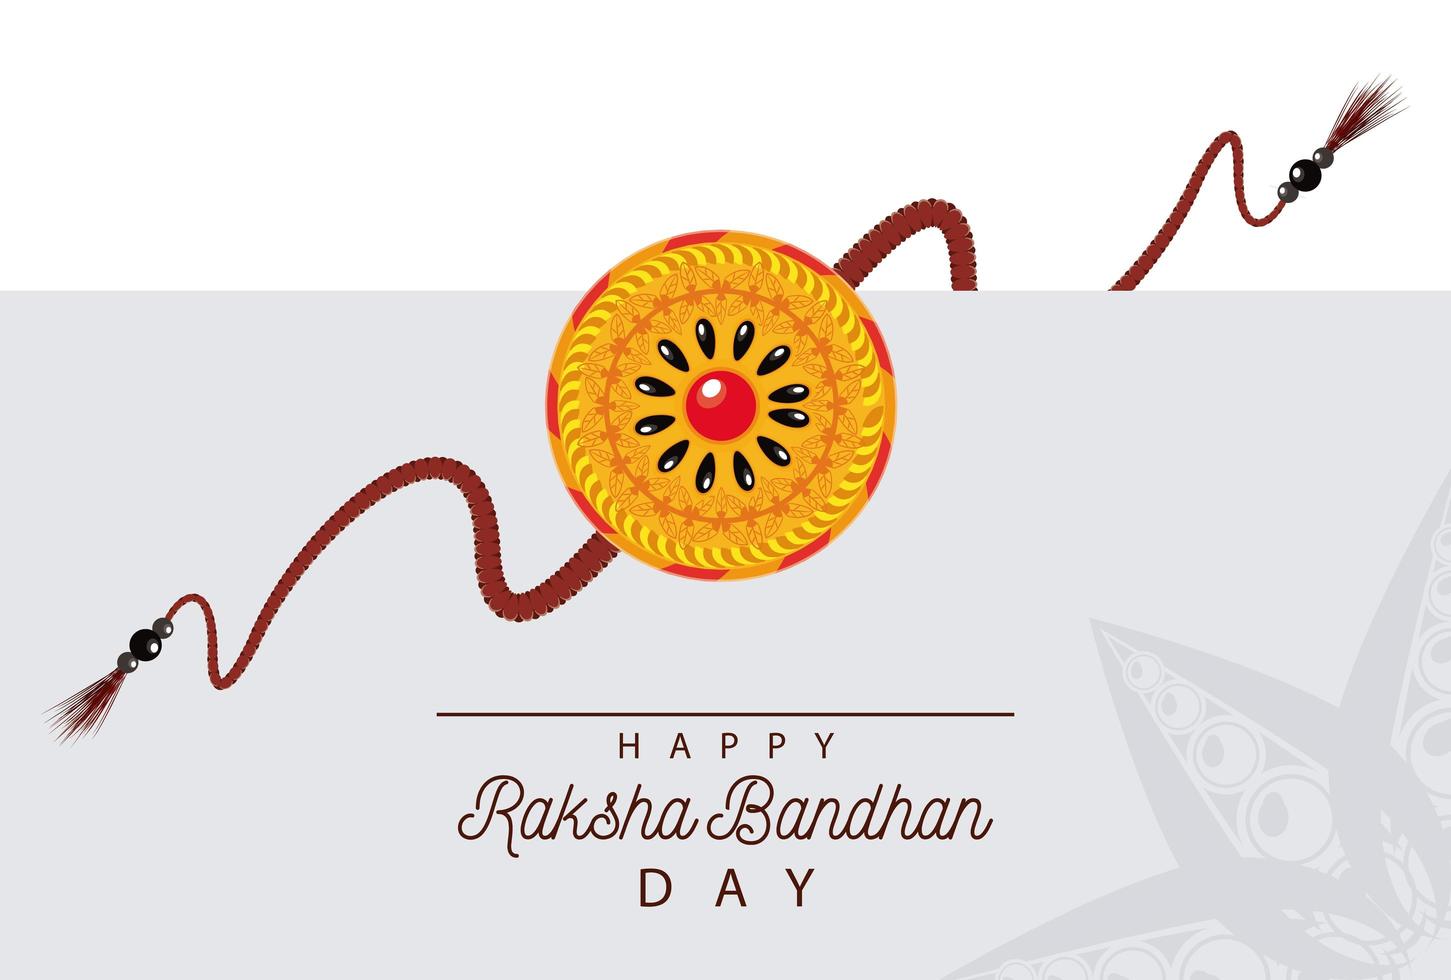 decoração floral raksha bandhan da índia vetor